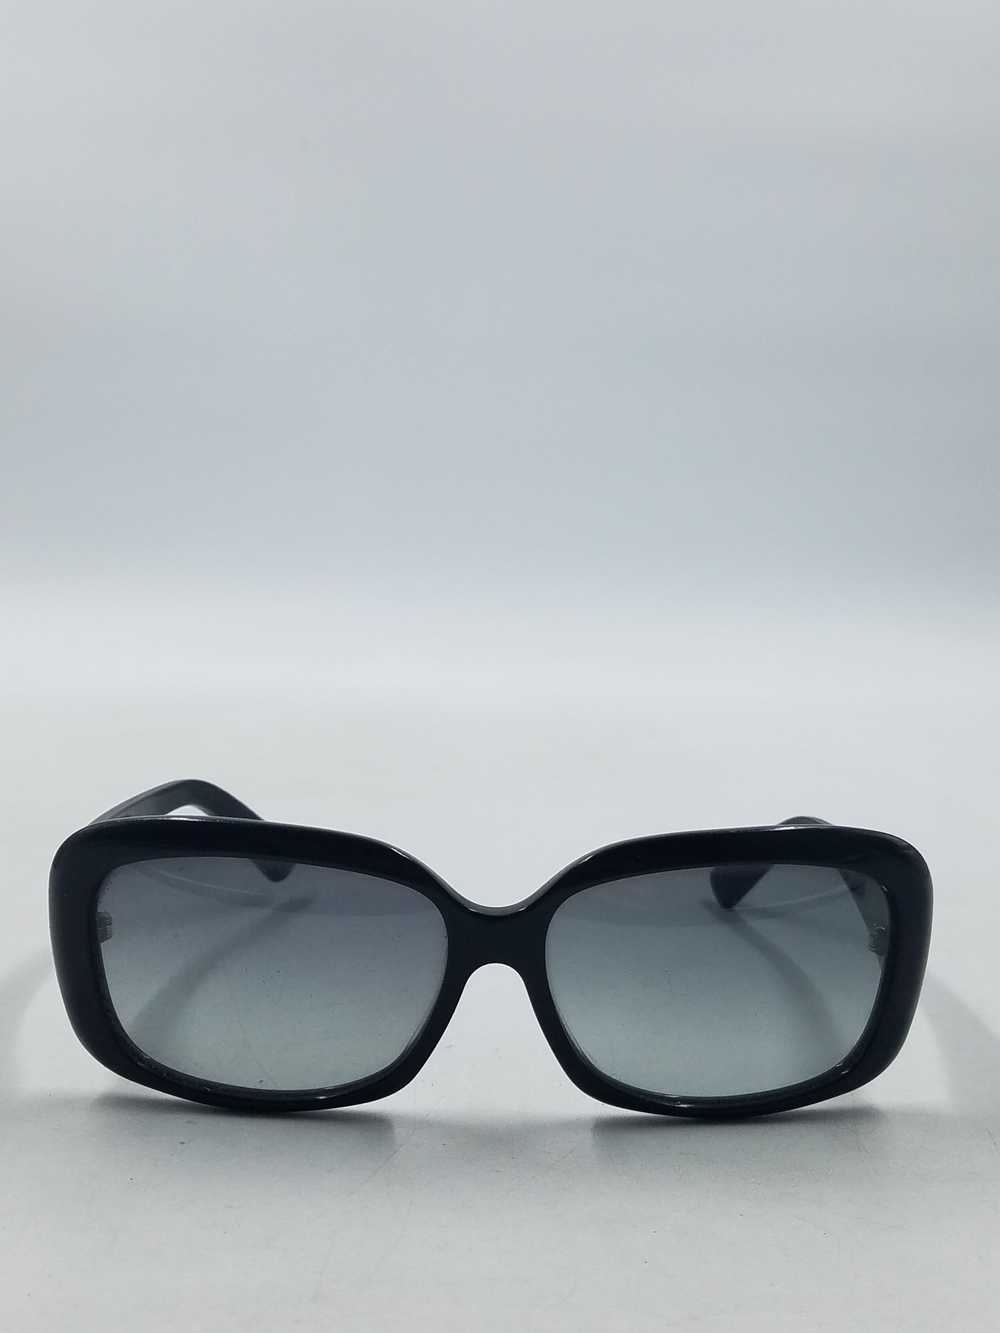 Fendi Black Tinted Square Sunglasses - image 2